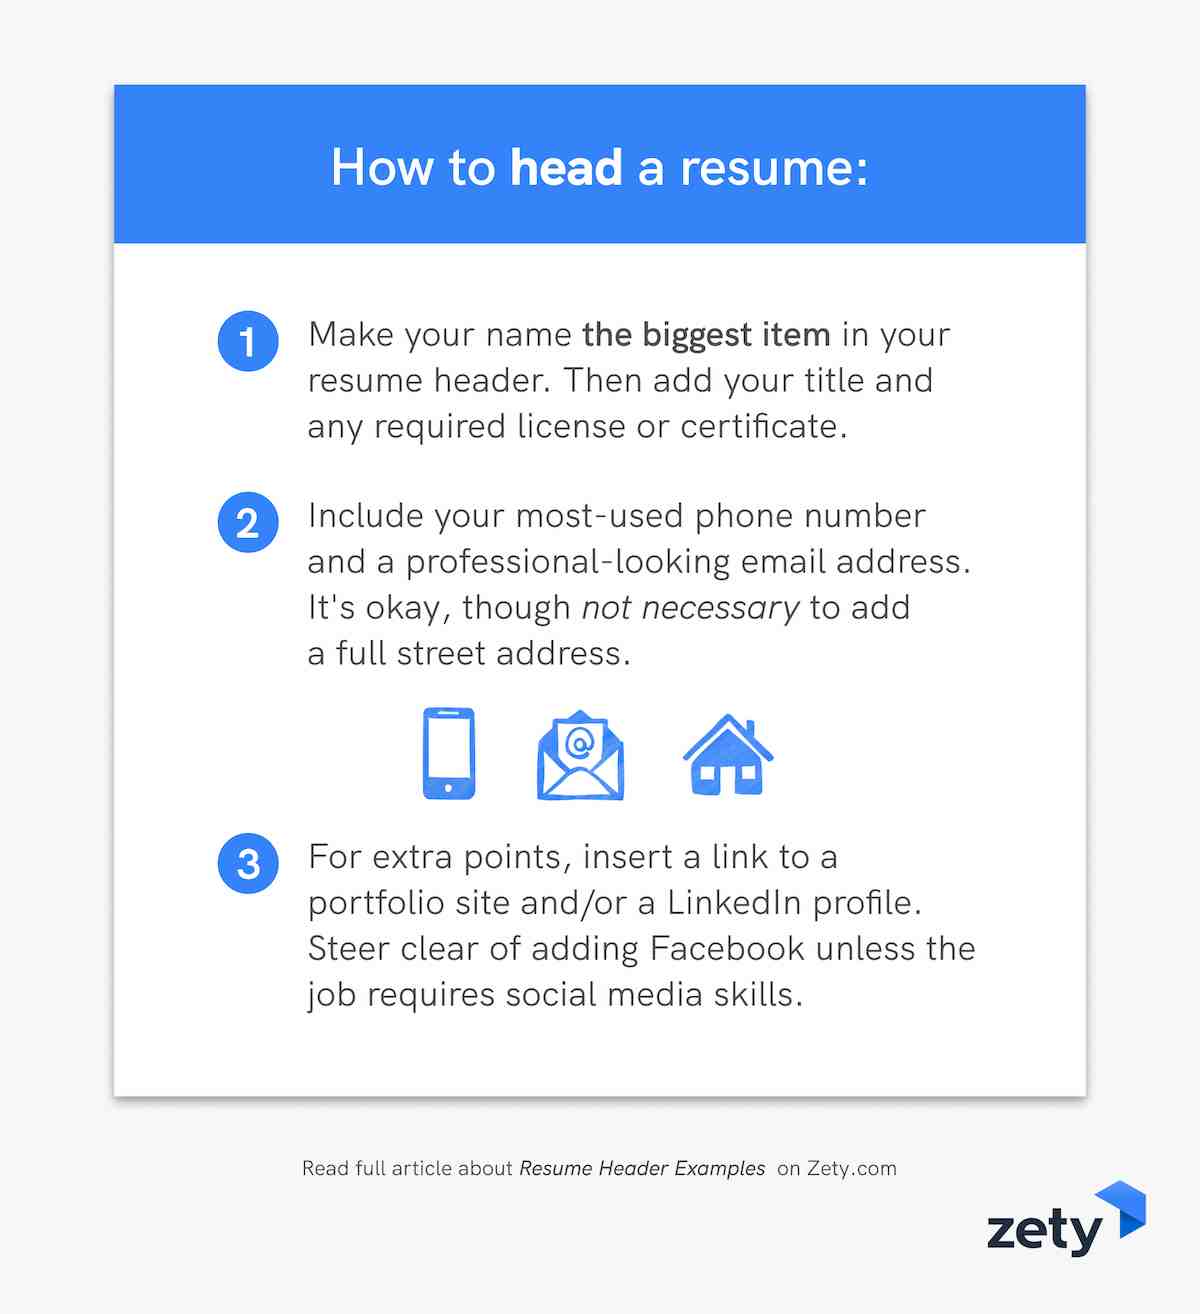 How to write a resume